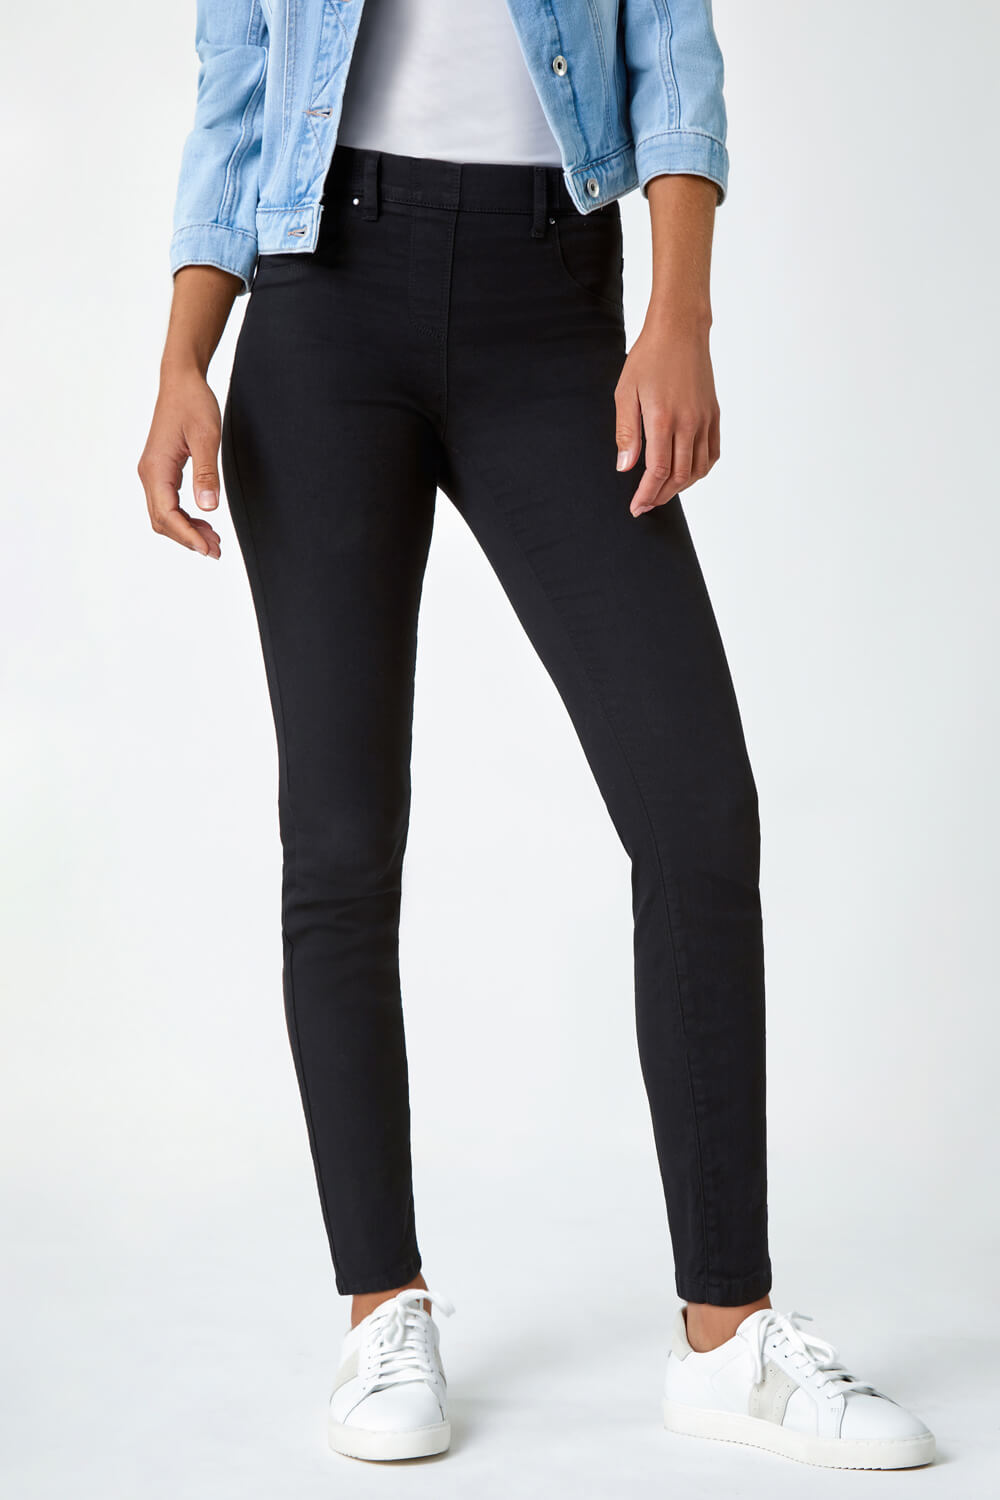 Christopher Blue Womens Black Velvet Stretch pants size 14